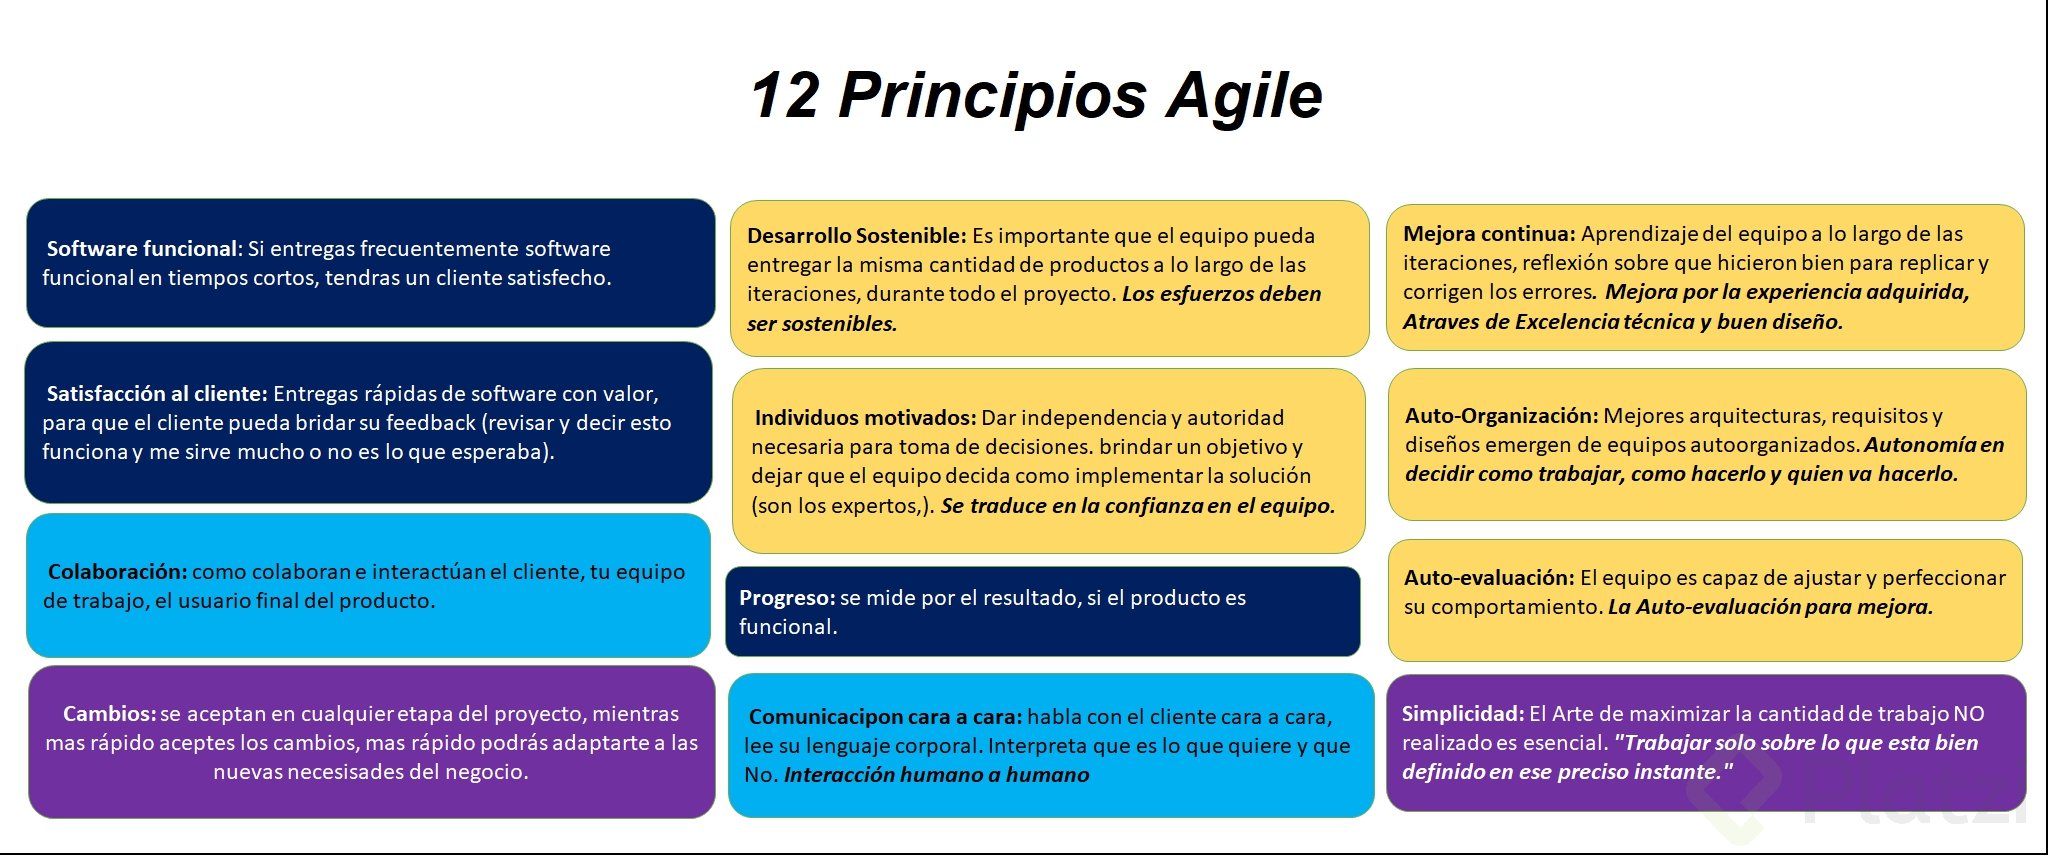 12 principios Agile.png